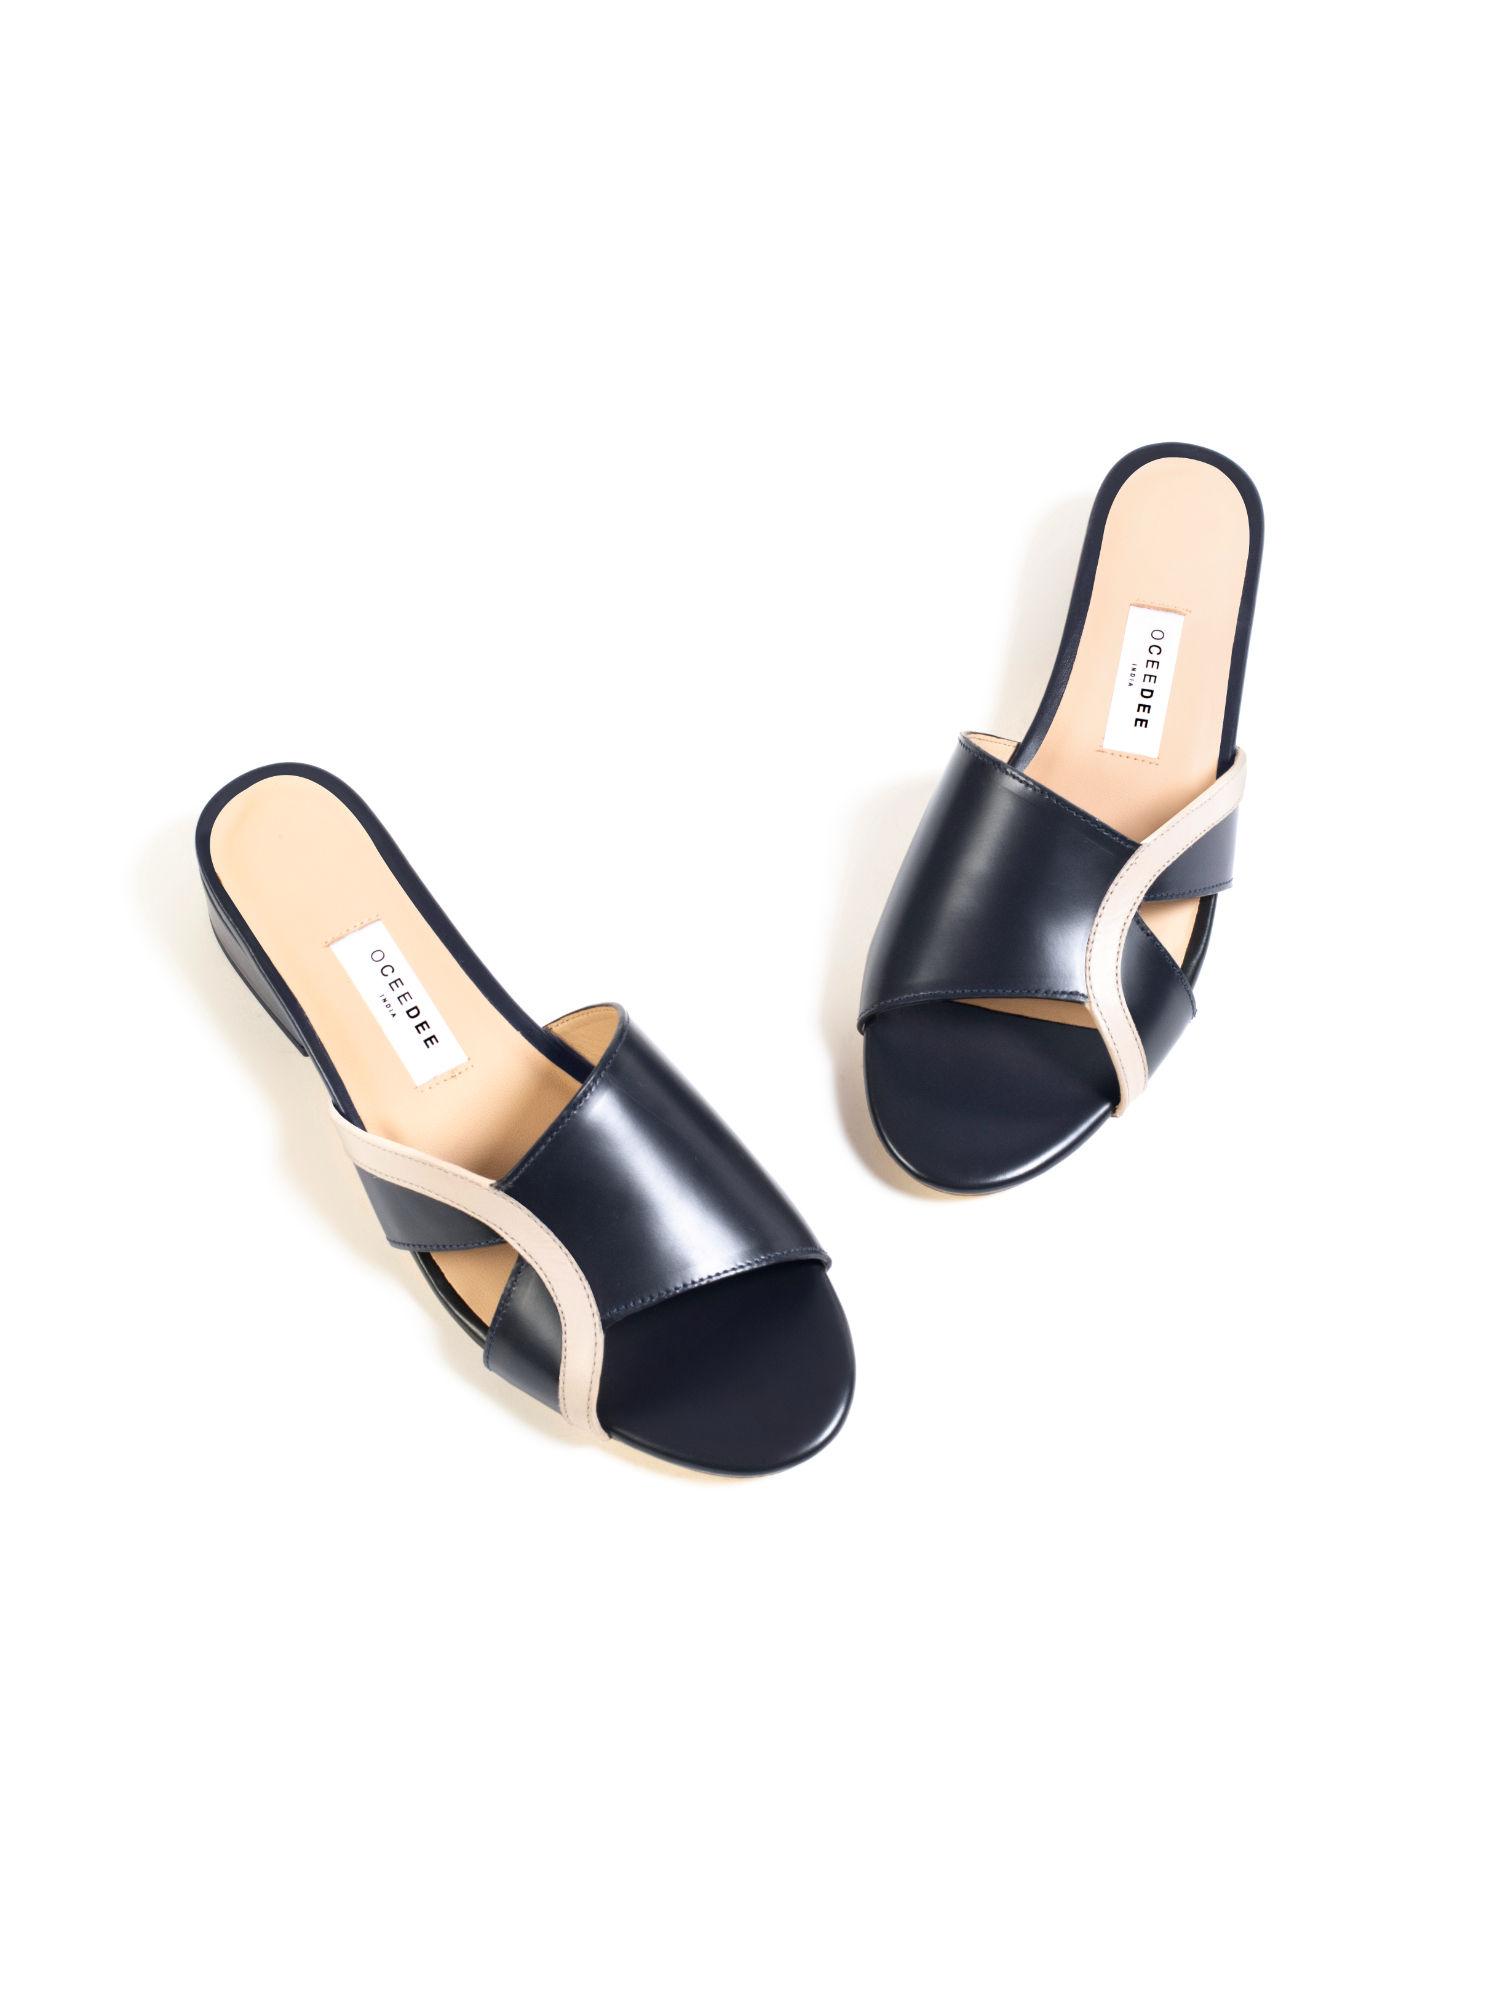 paula navy blue solid leather sandal heels